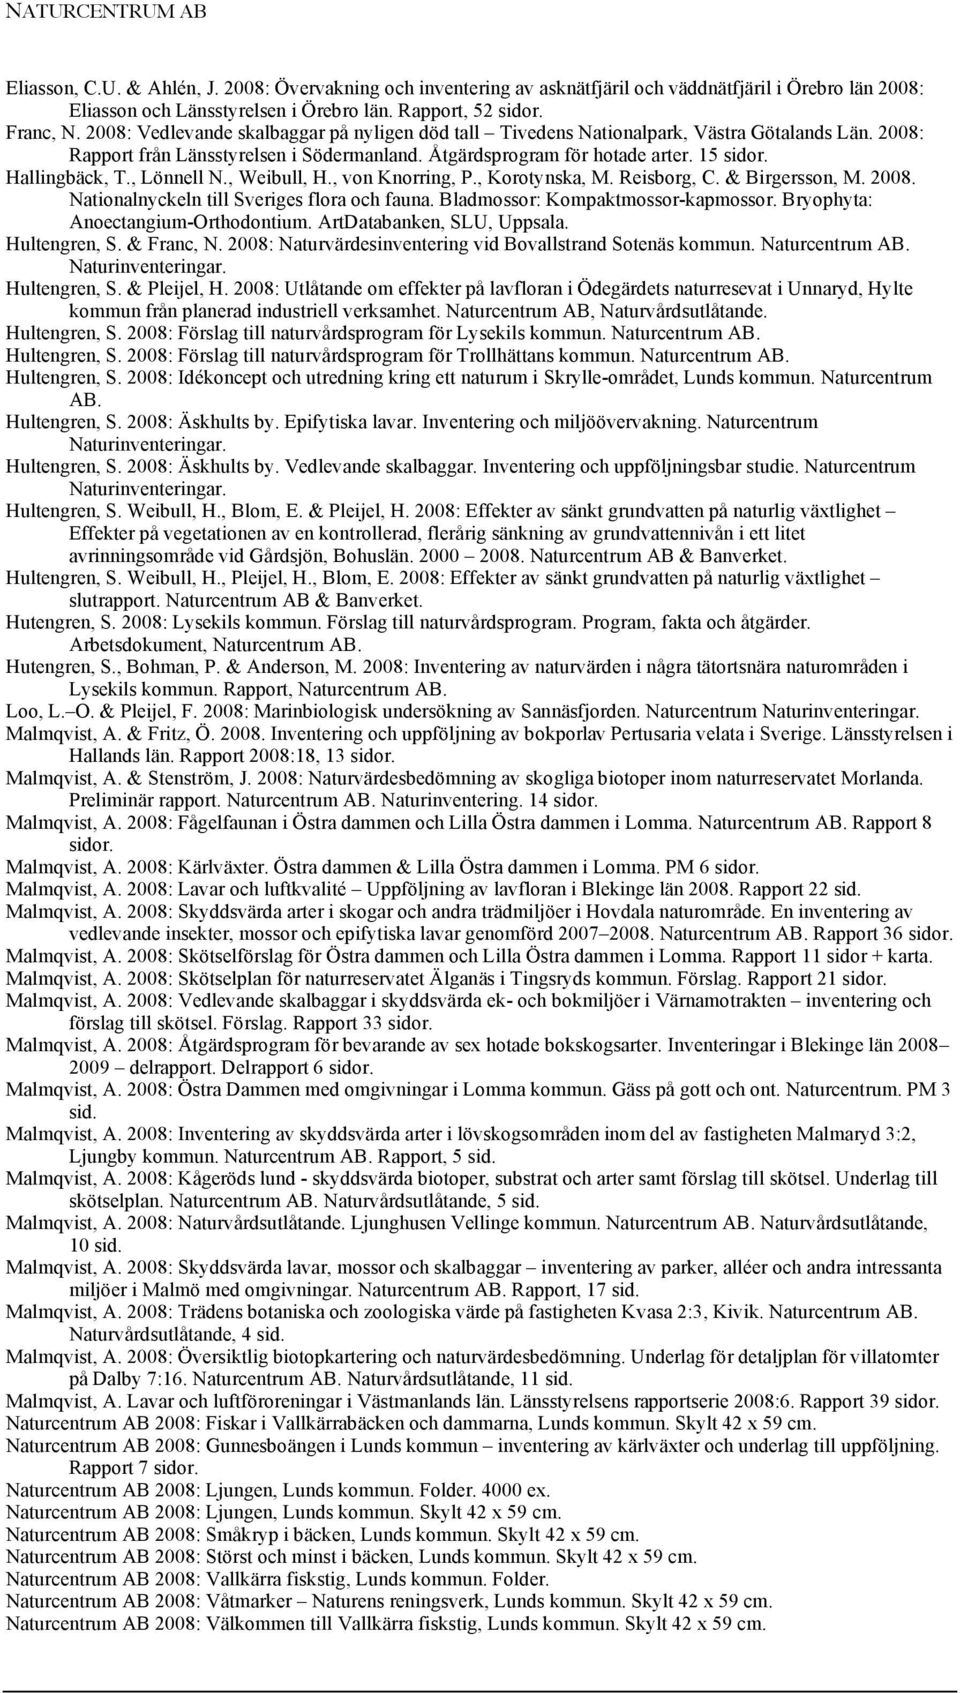 , Lönnell N., Weibull, H., von Knorring, P., Korotynska, M. Reisborg, C. & Birgersson, M. 2008. Nationalnyckeln till Sveriges flora och fauna. Bladmossor: Kompaktmossor-kapmossor.